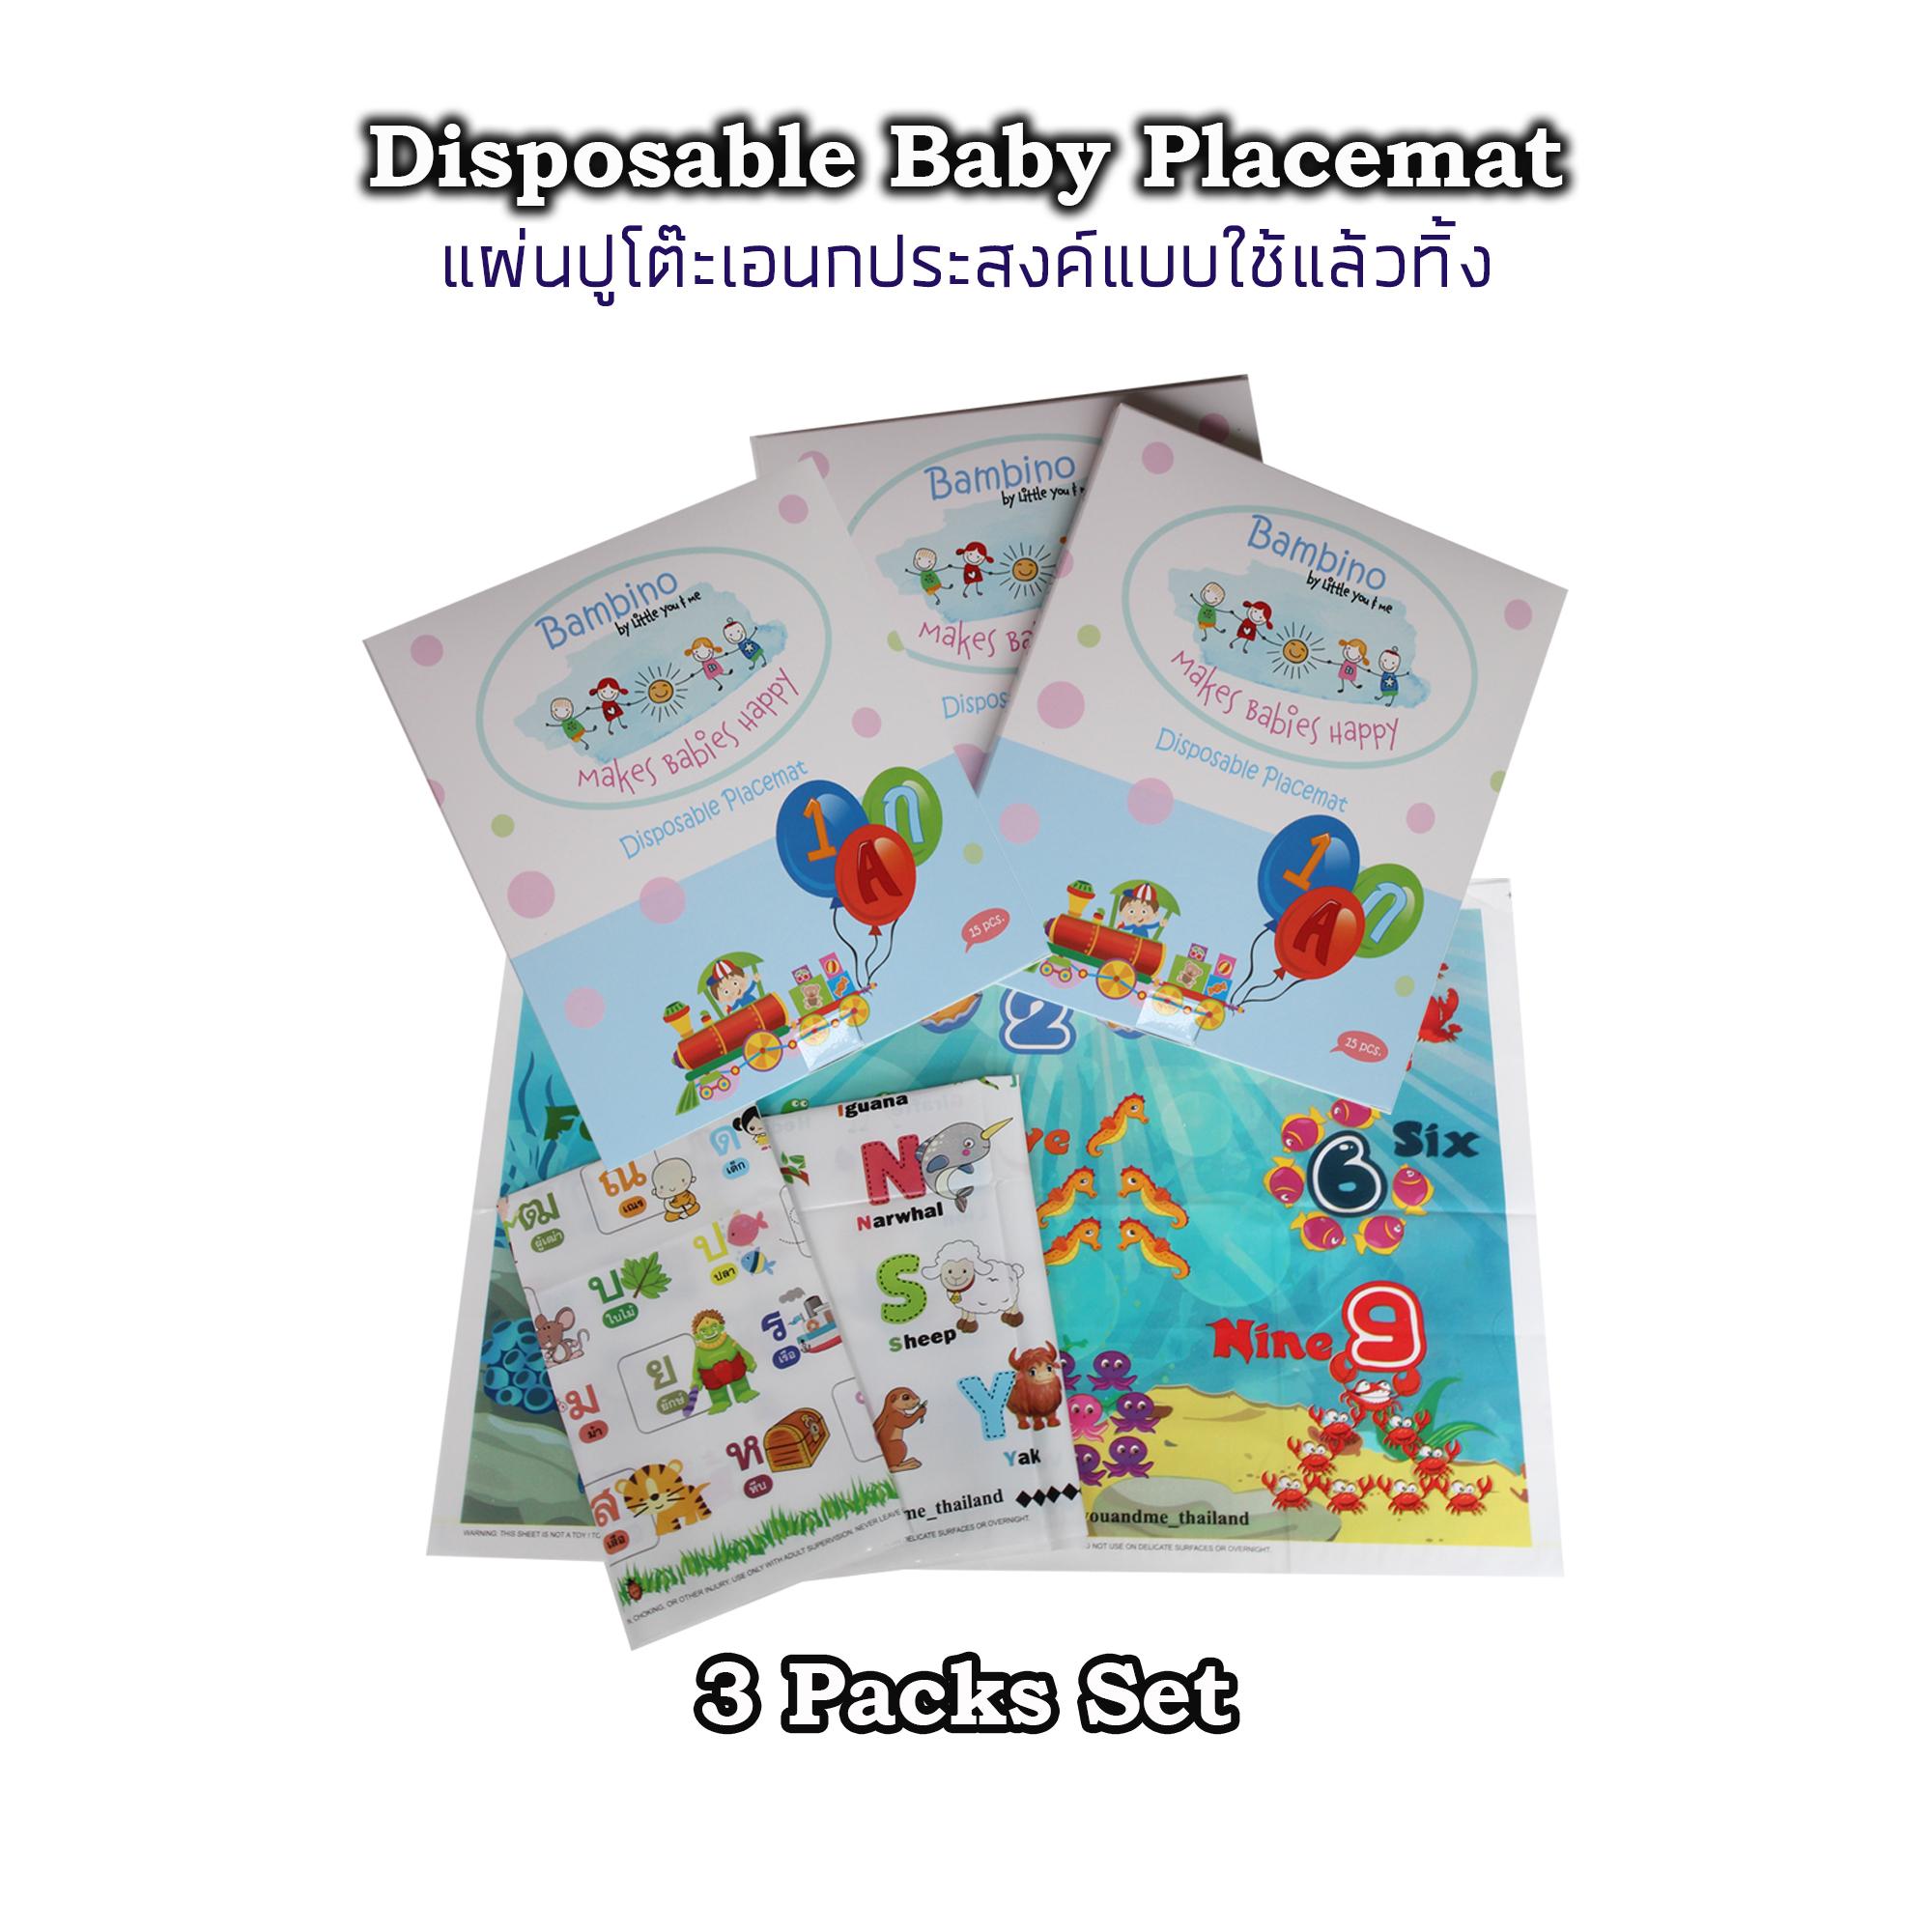 Disposable Baby Placemat, 3Packs Set. (แผ่นปูโต๊ะเอนกประสงค์แบบใช้แล้วทิ้ง)